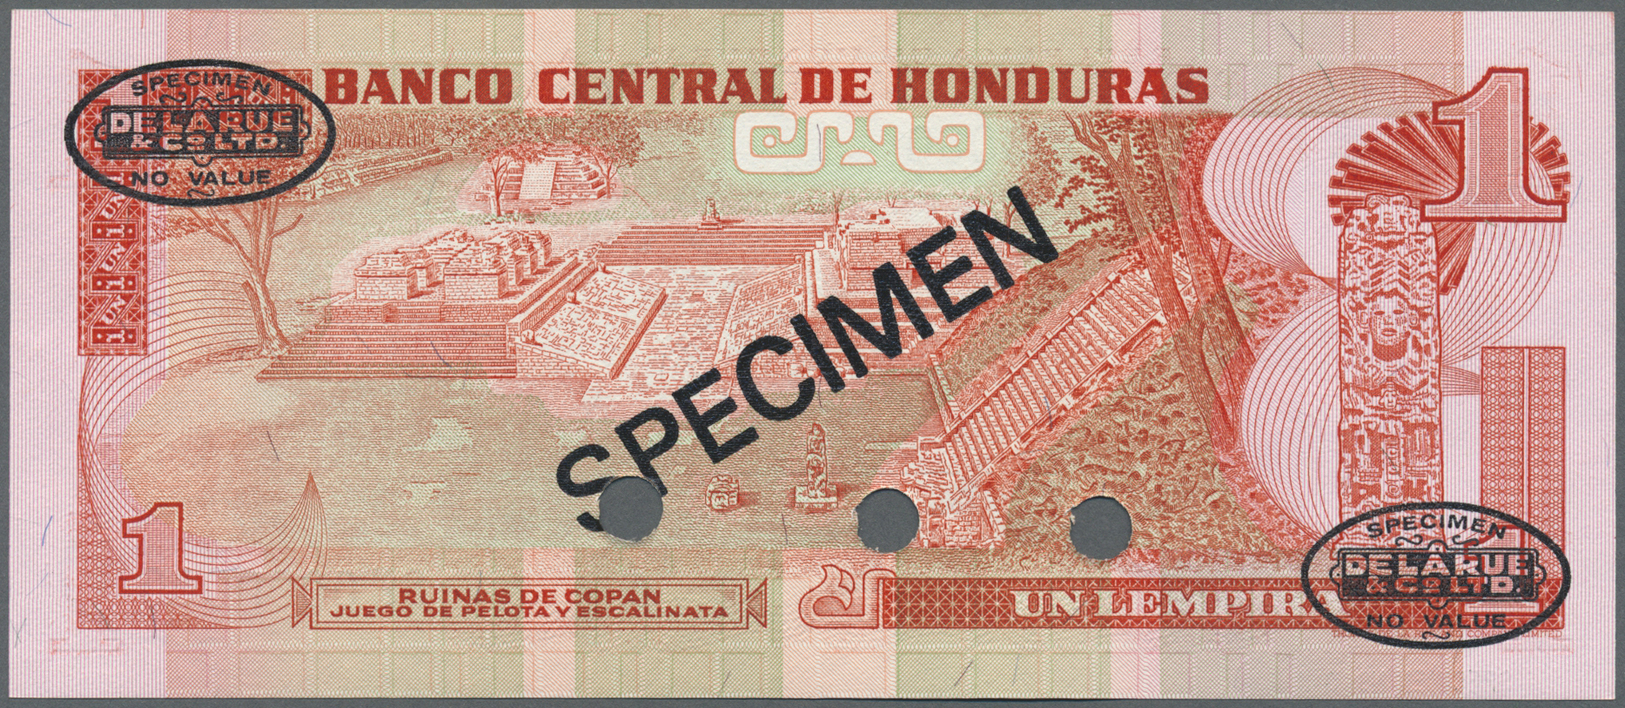 00994 Honduras: 1 Lempira 1980 Specimen P. 68s In Condition: UNC. - Honduras